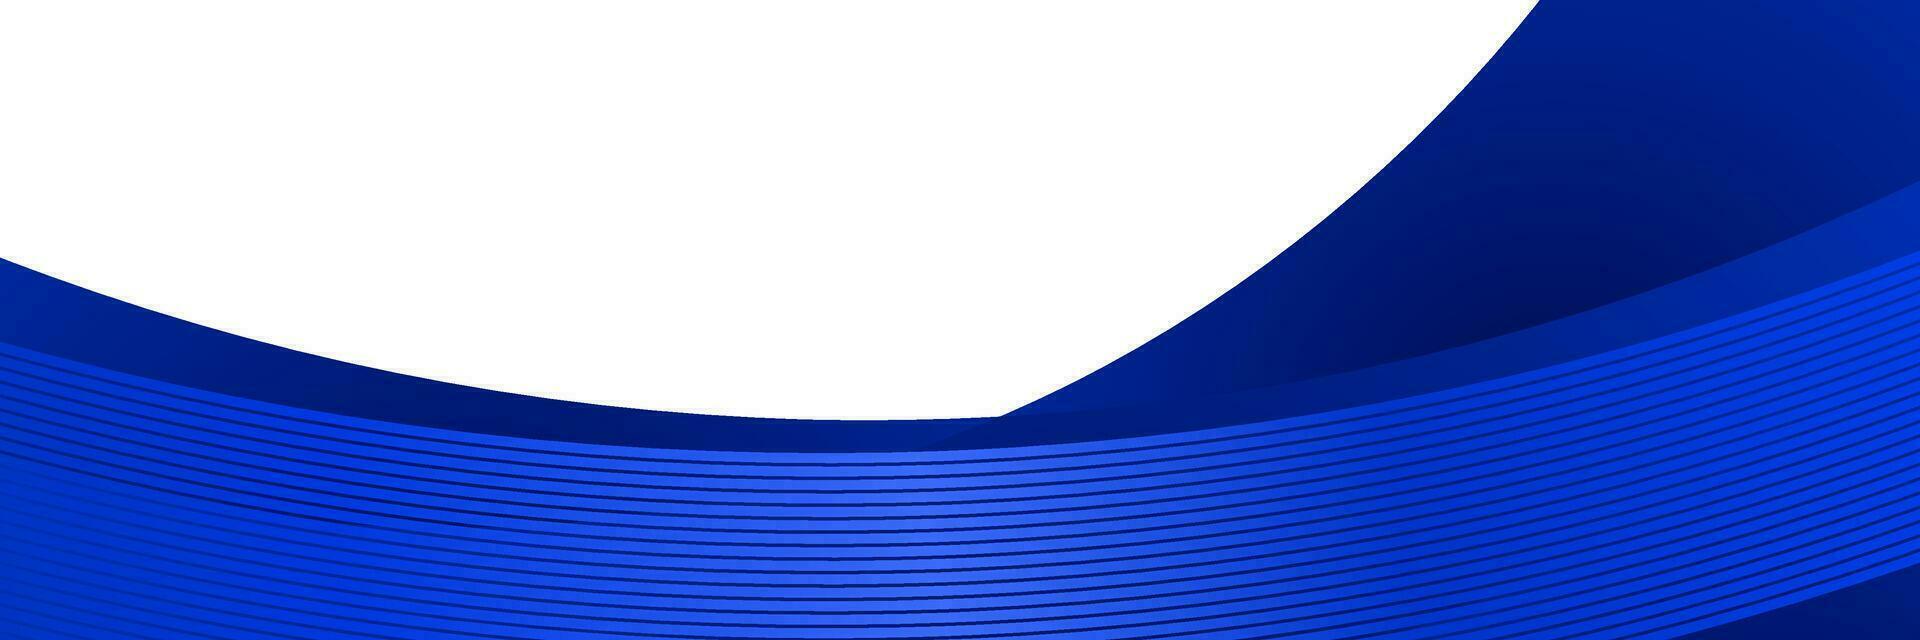 elegante azul degradado antecedentes con brillante líneas vector